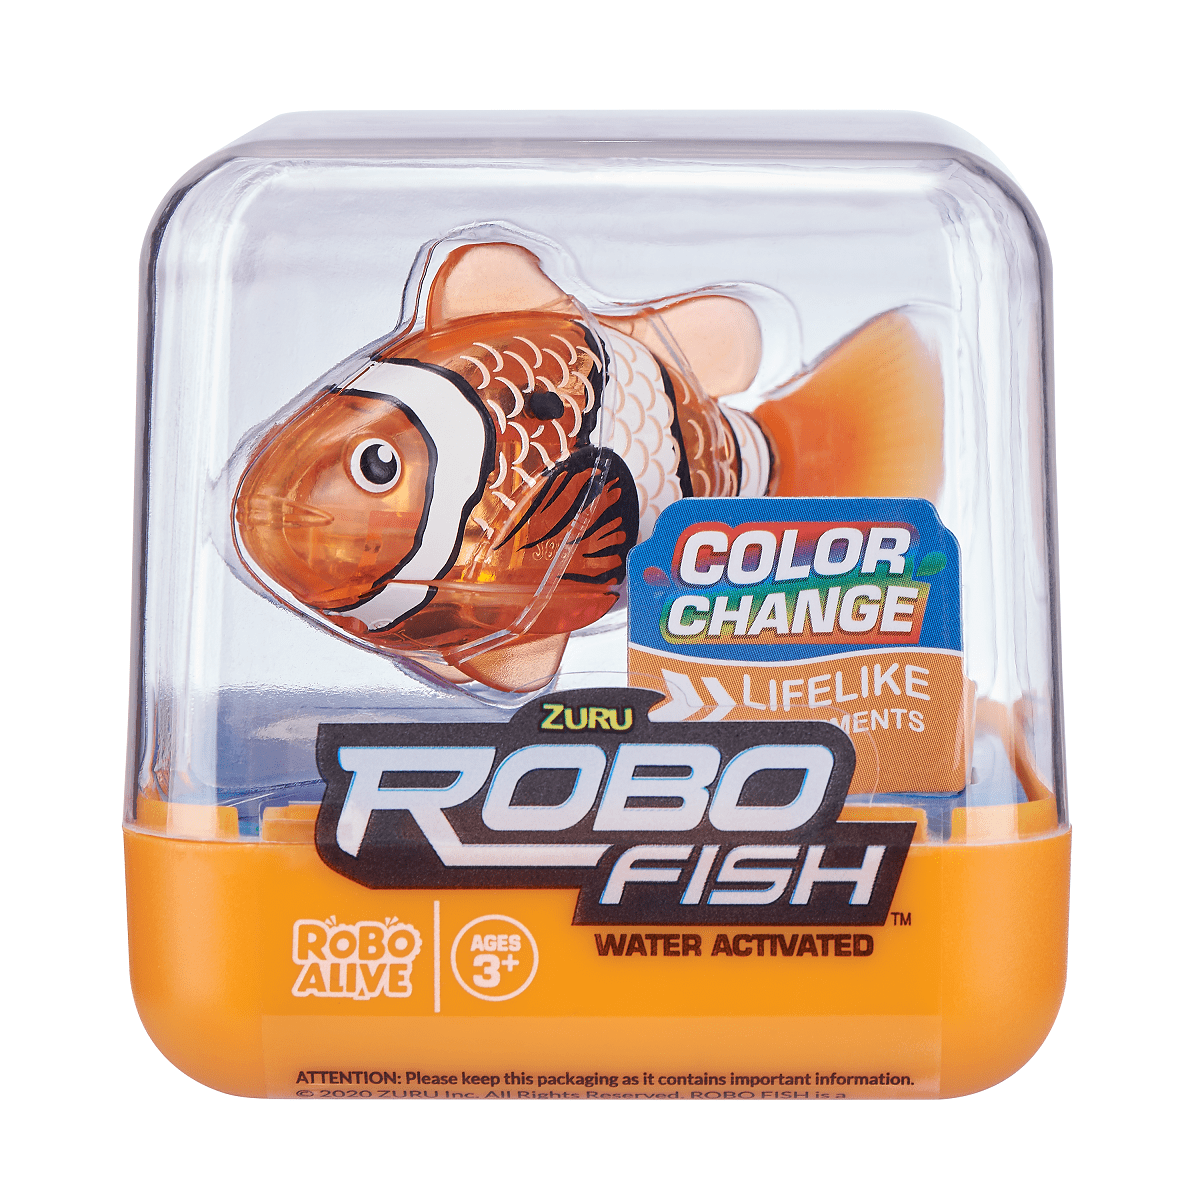 Robo Alive Electronic Interactive Fish Orange Walmart